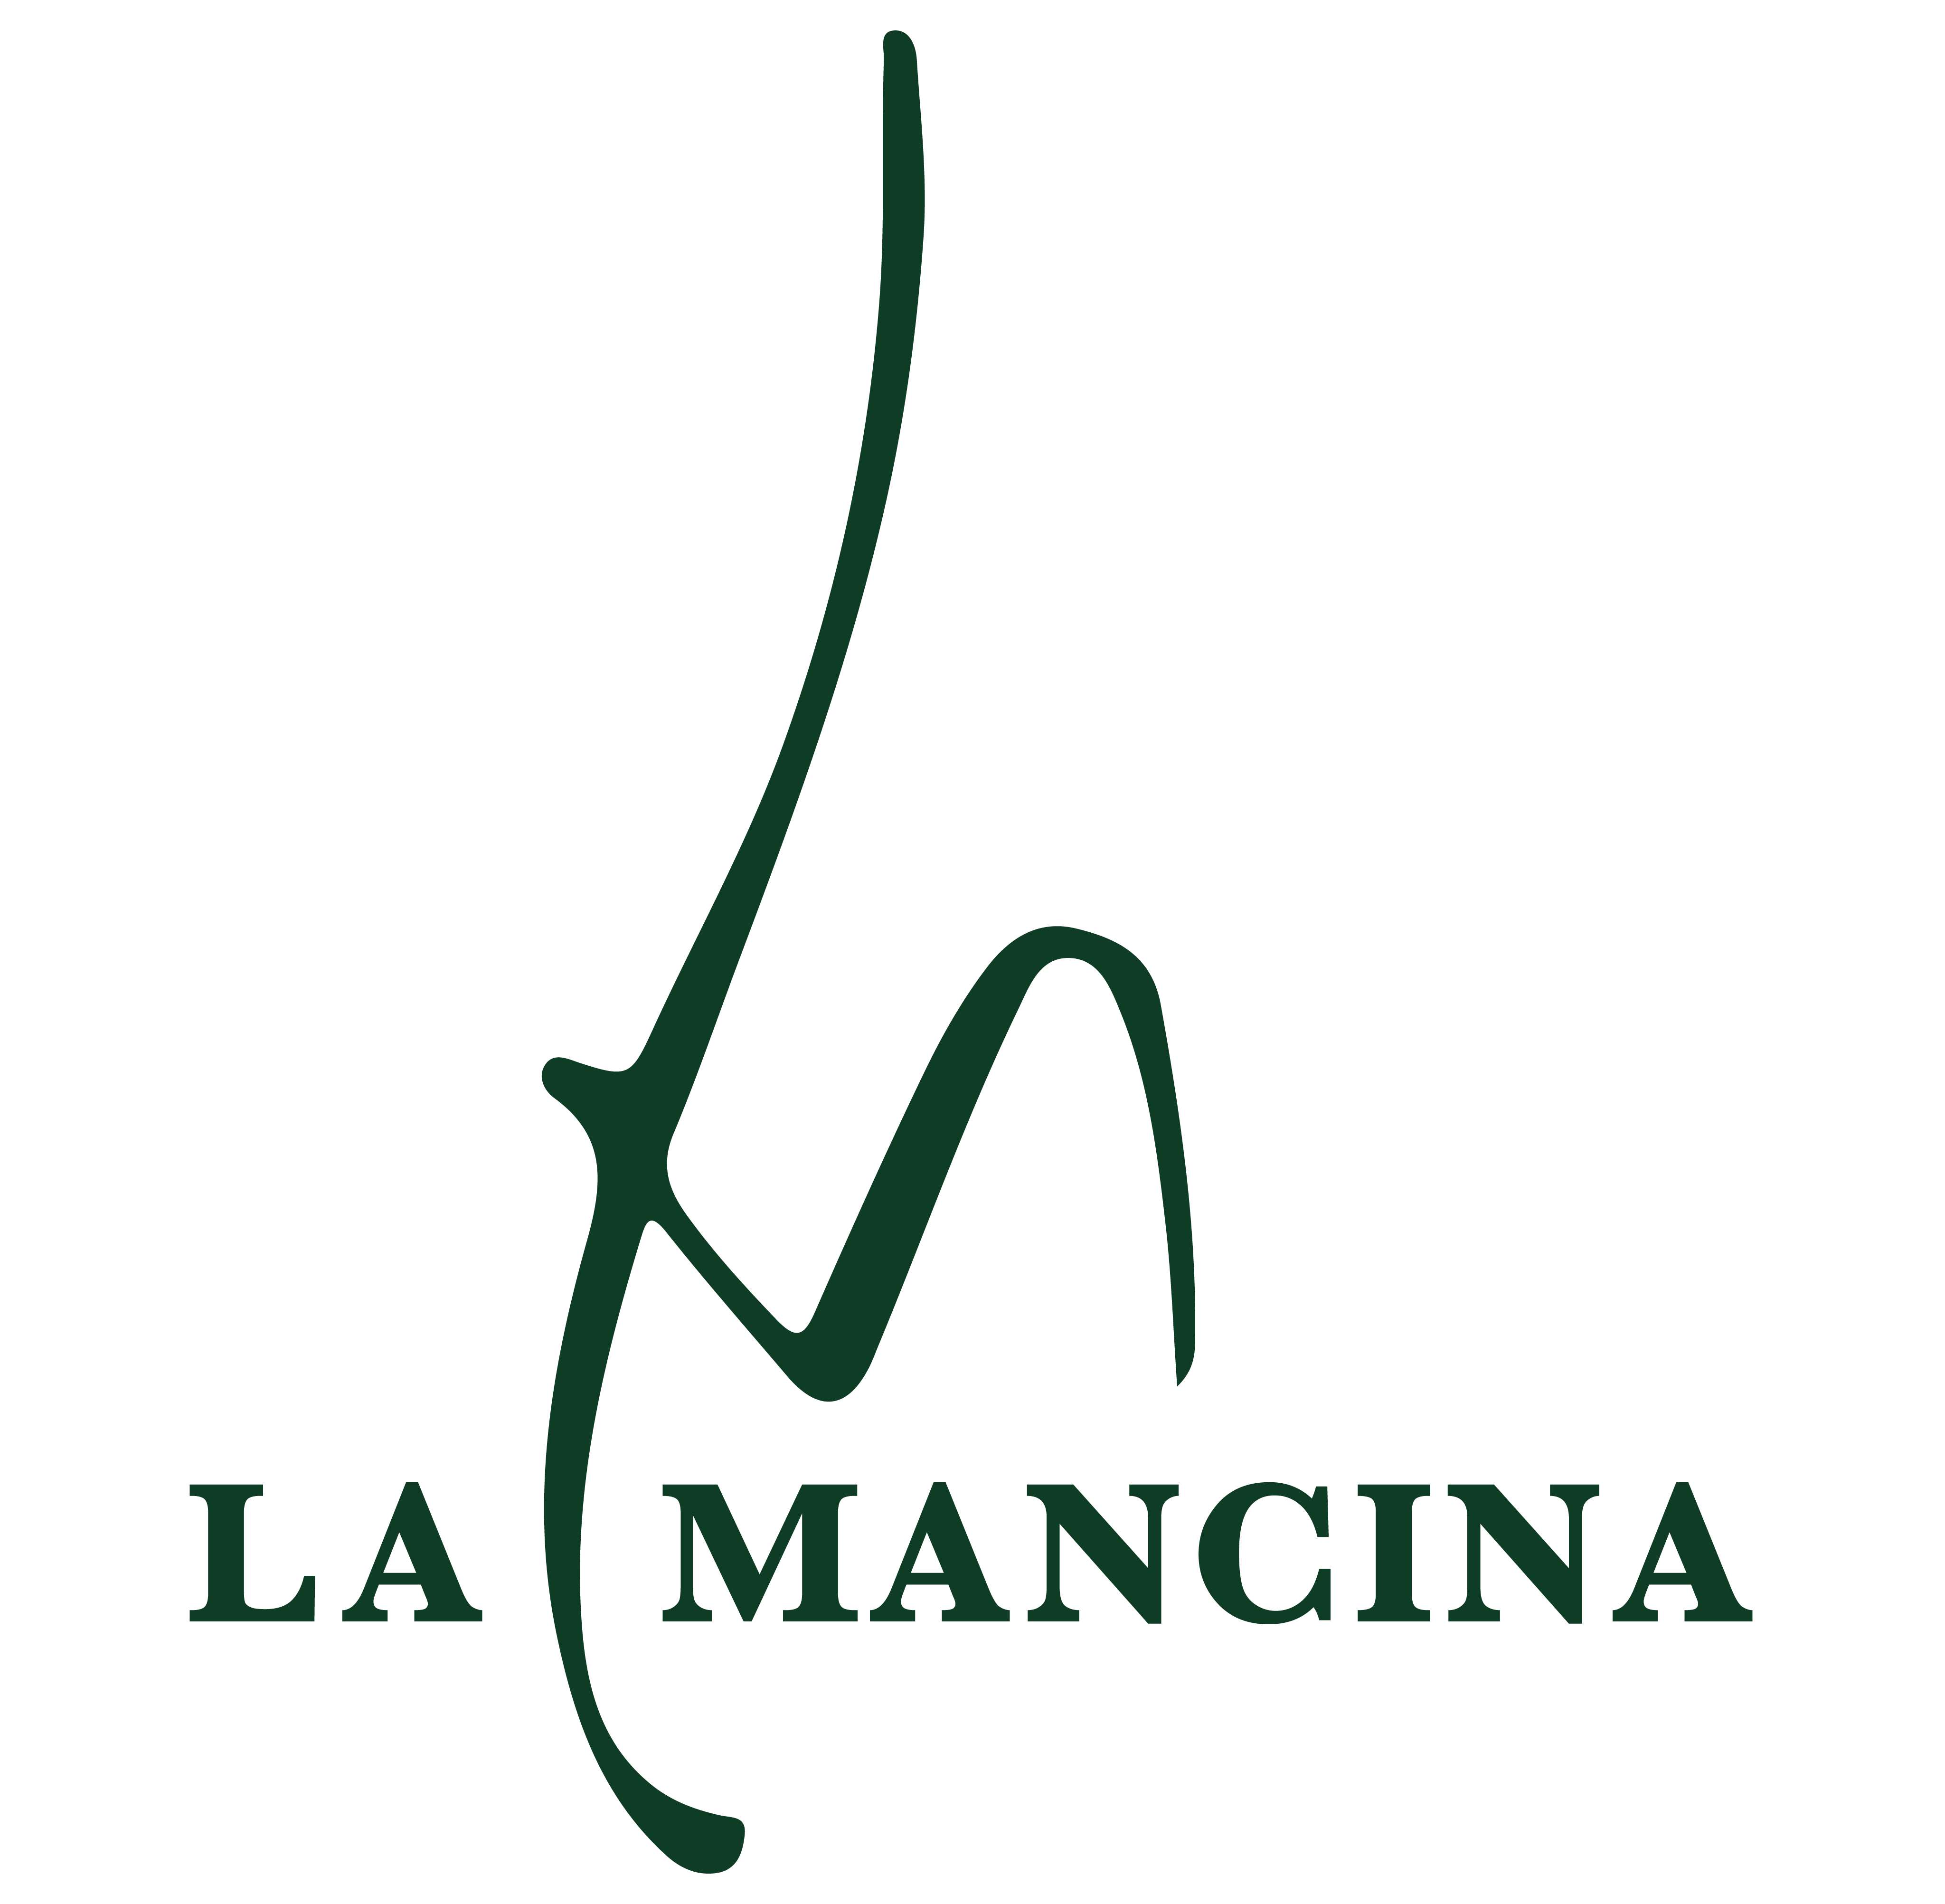 La-Mancina-logo VERDE-01